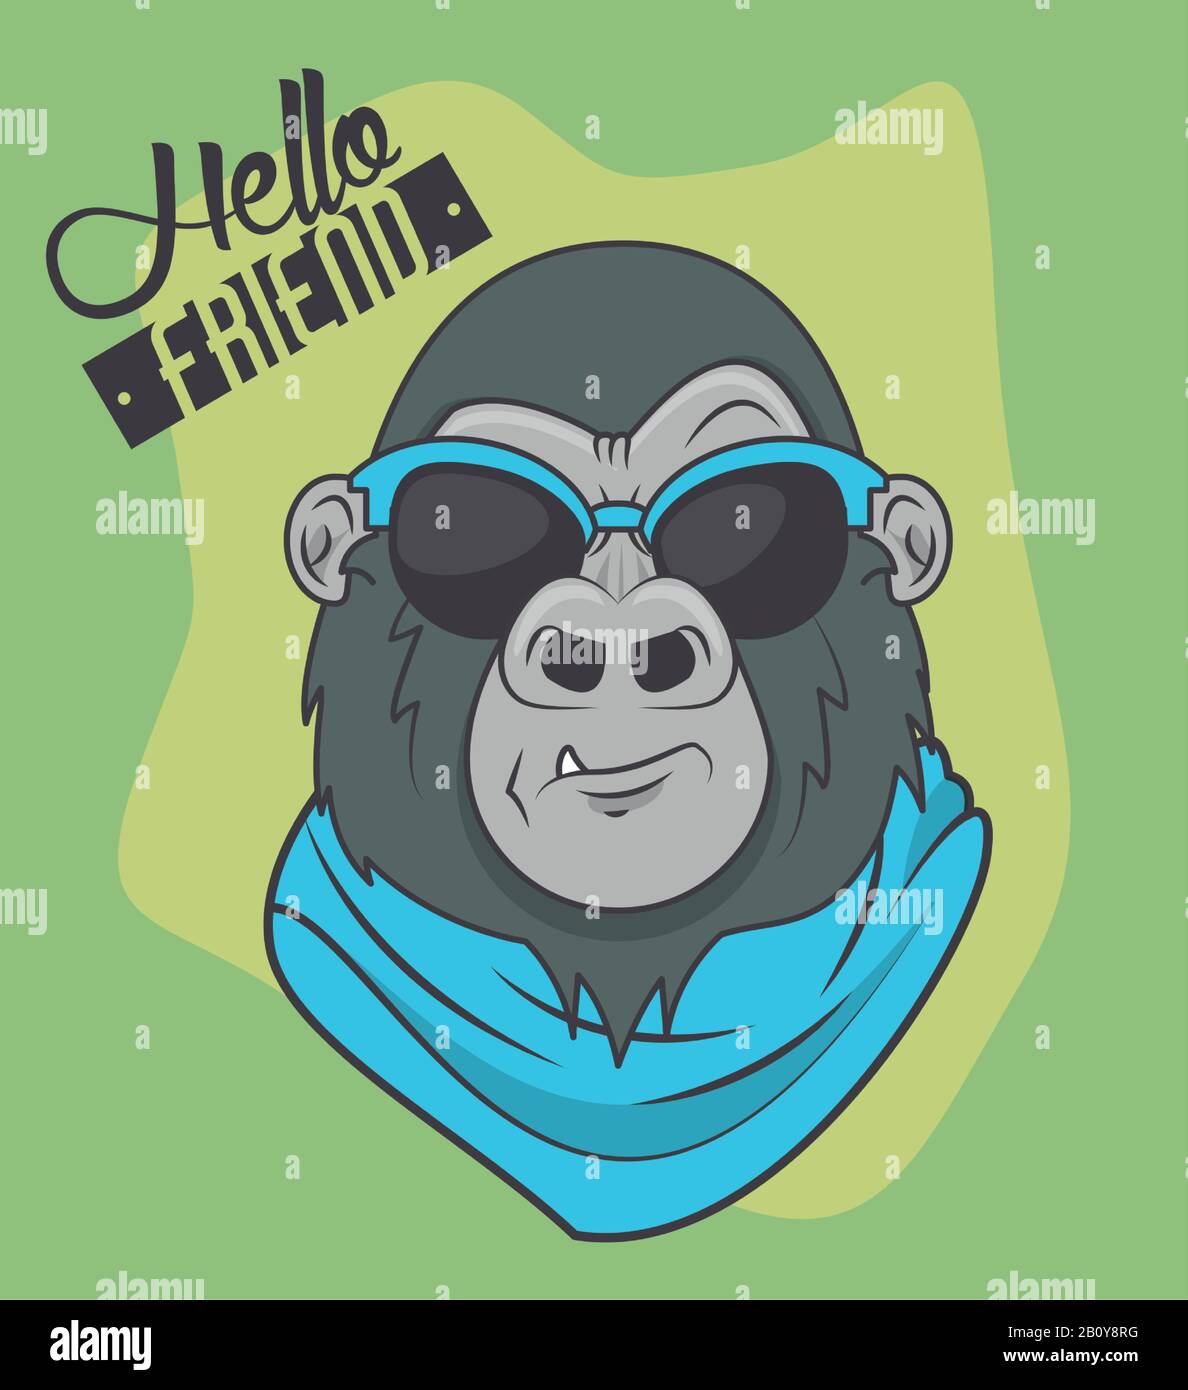 https://c8.alamy.com/comp/2B0Y8RG/funny-gorilla-with-sunglasses-cool-style-2B0Y8RG.jpg